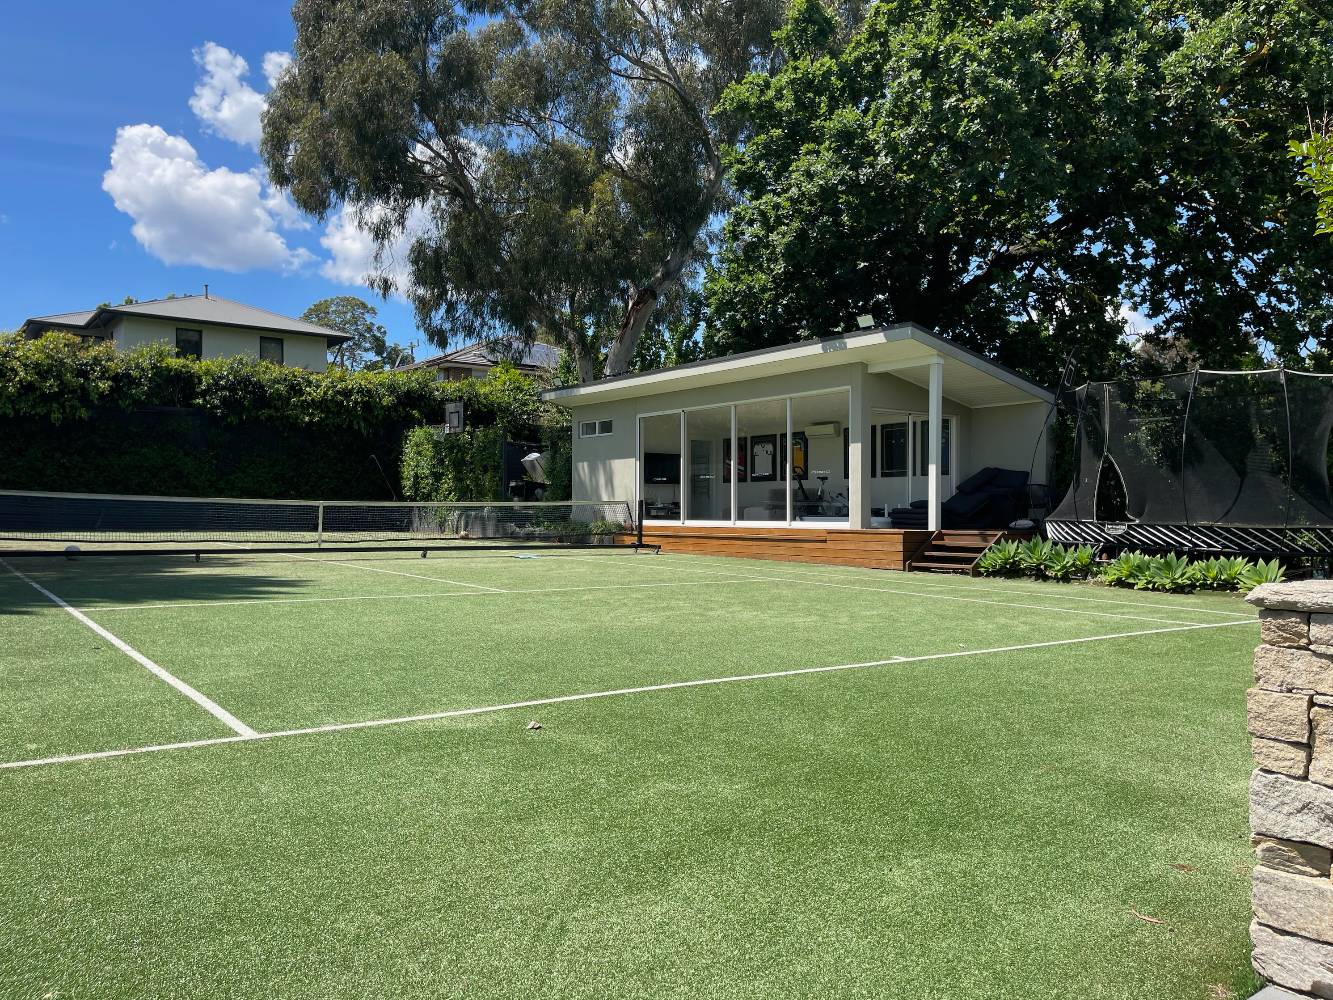 Tennis court (with basketball and netball rings) and cabana/gym